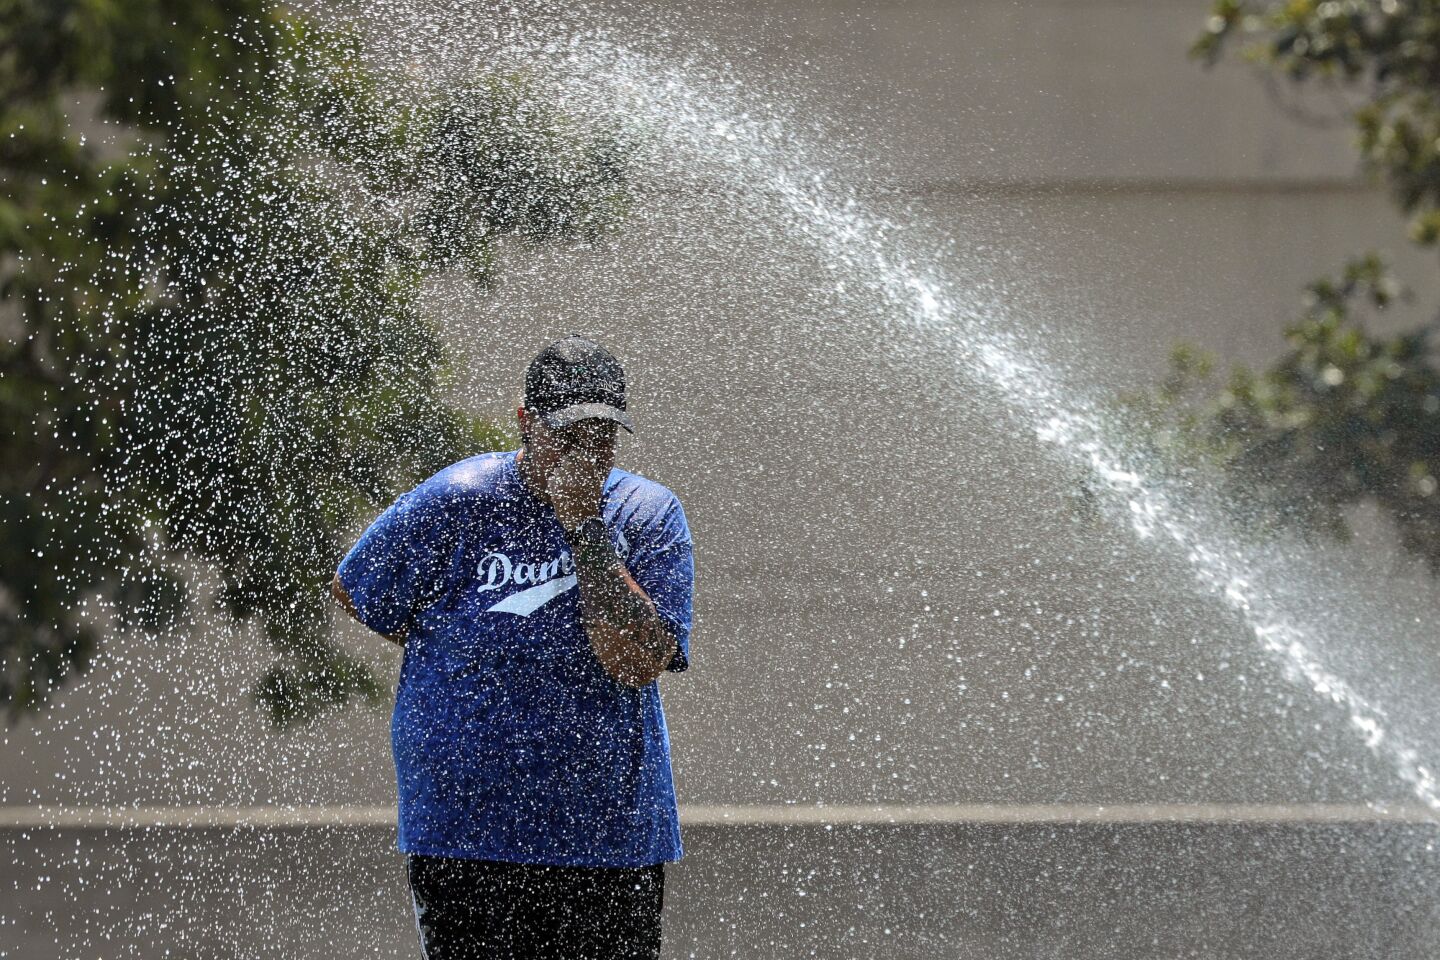 Reana Gallardo cools off in the sprinkler at Mason Park in Chatsworth